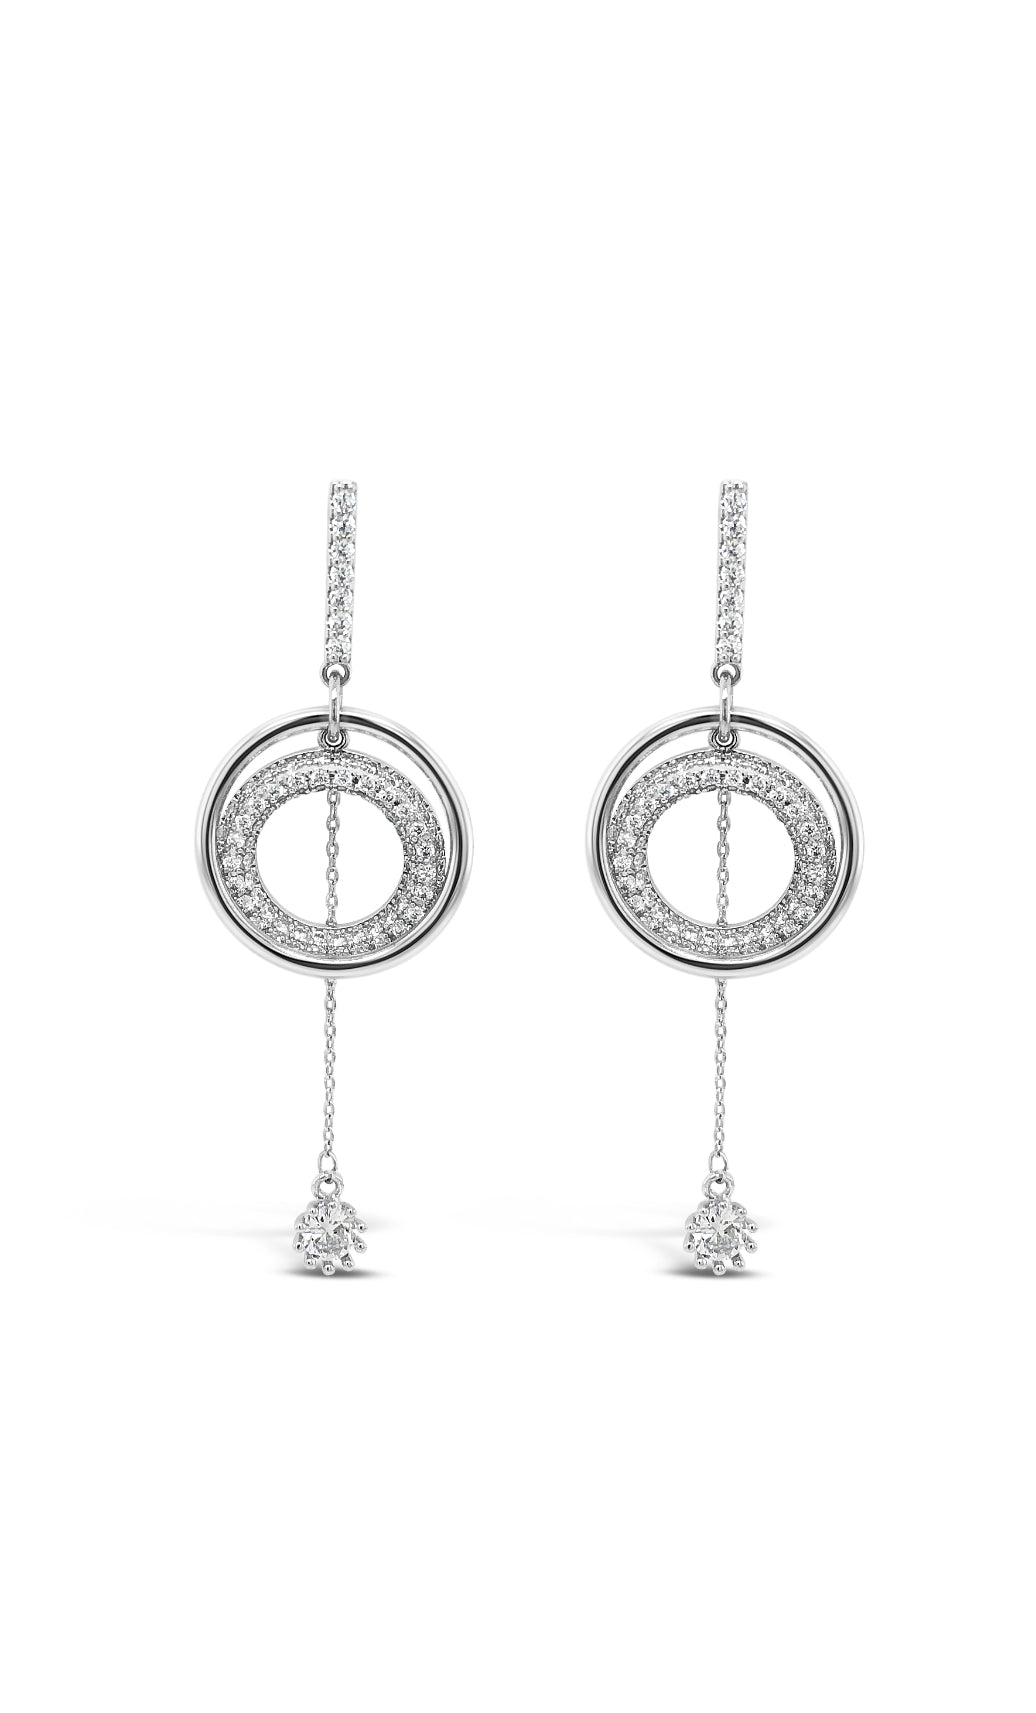 Silver/Rhodium-Plated Crystal Drop Earrings